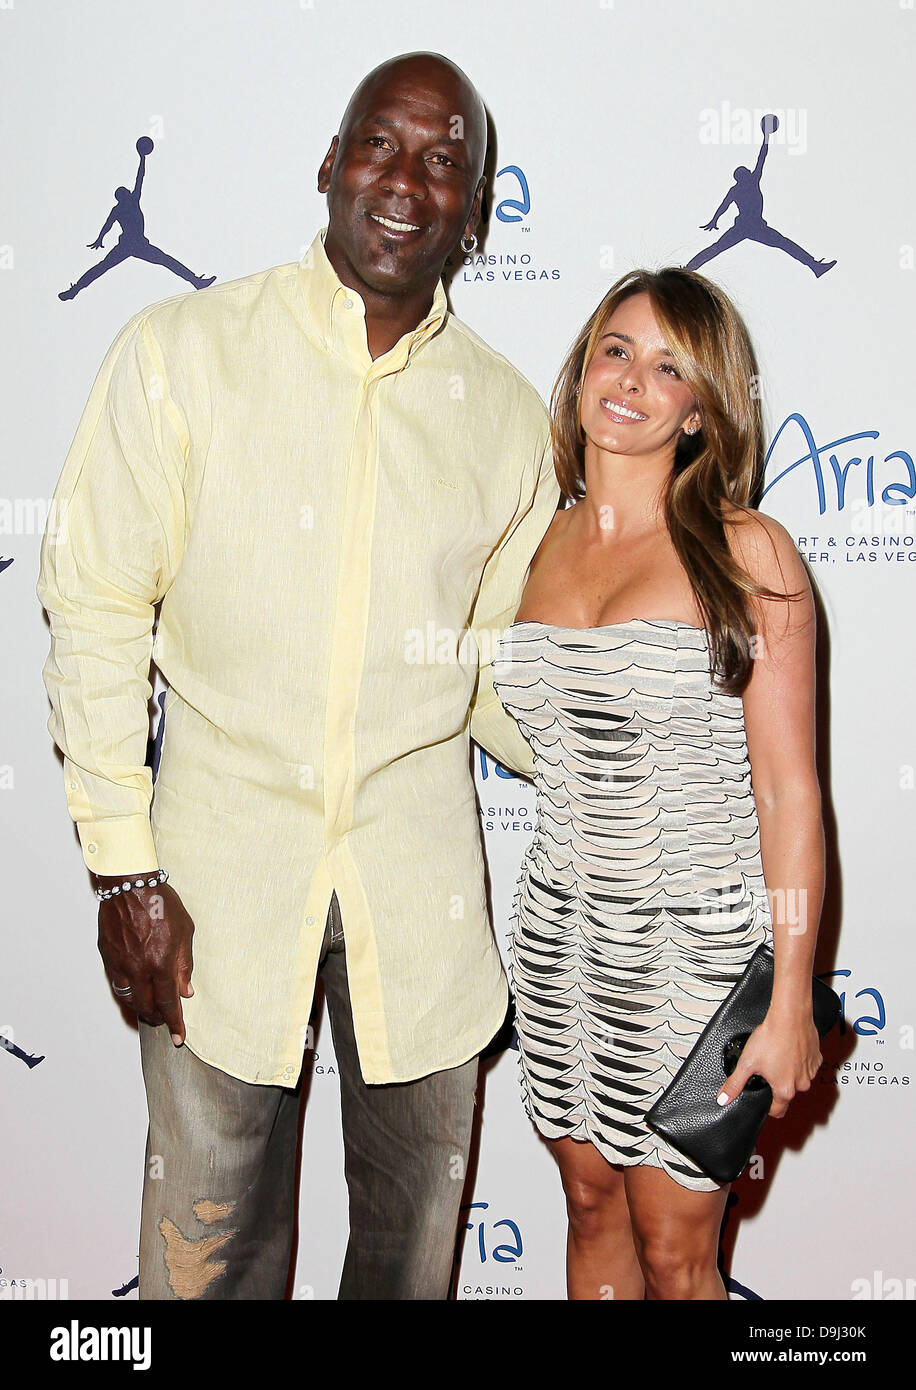 Michael Jordan Has Announced That He Is Engaged To His Longtime Girlfriend Yvette Prieto Michael